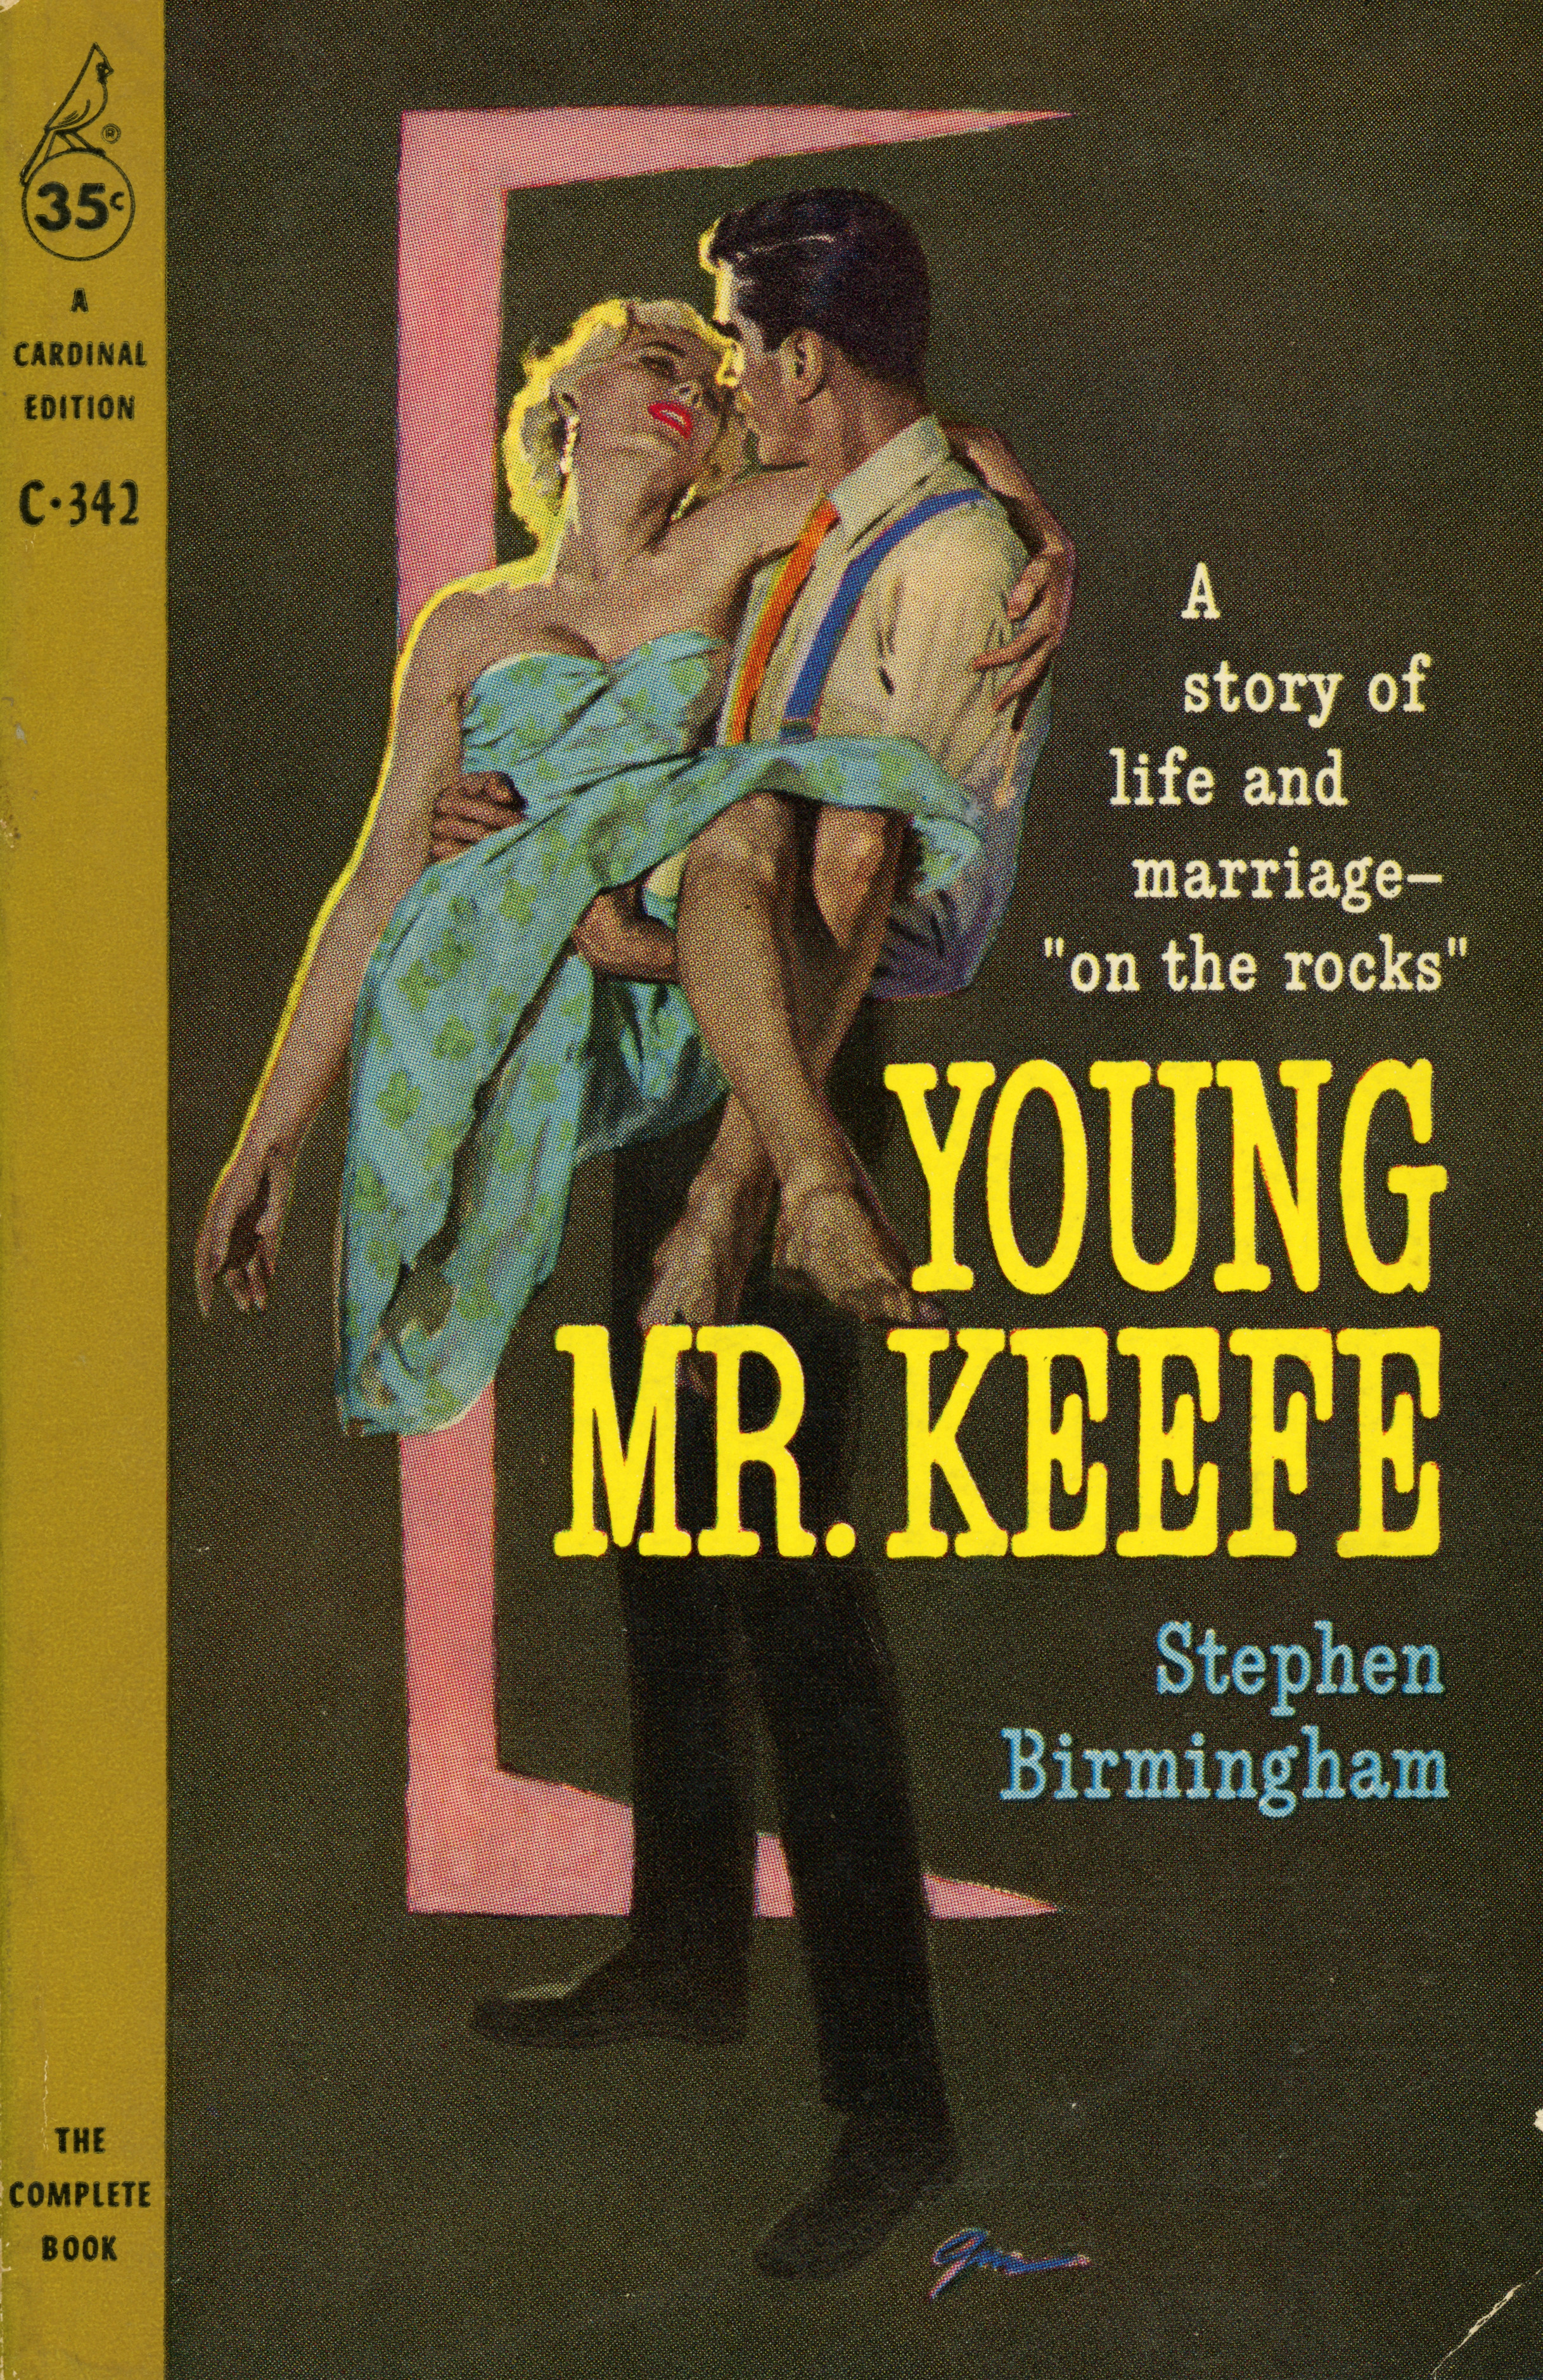 5412598658-cardinal-books-c-342-stephen-birmingham-young-mr-keefe